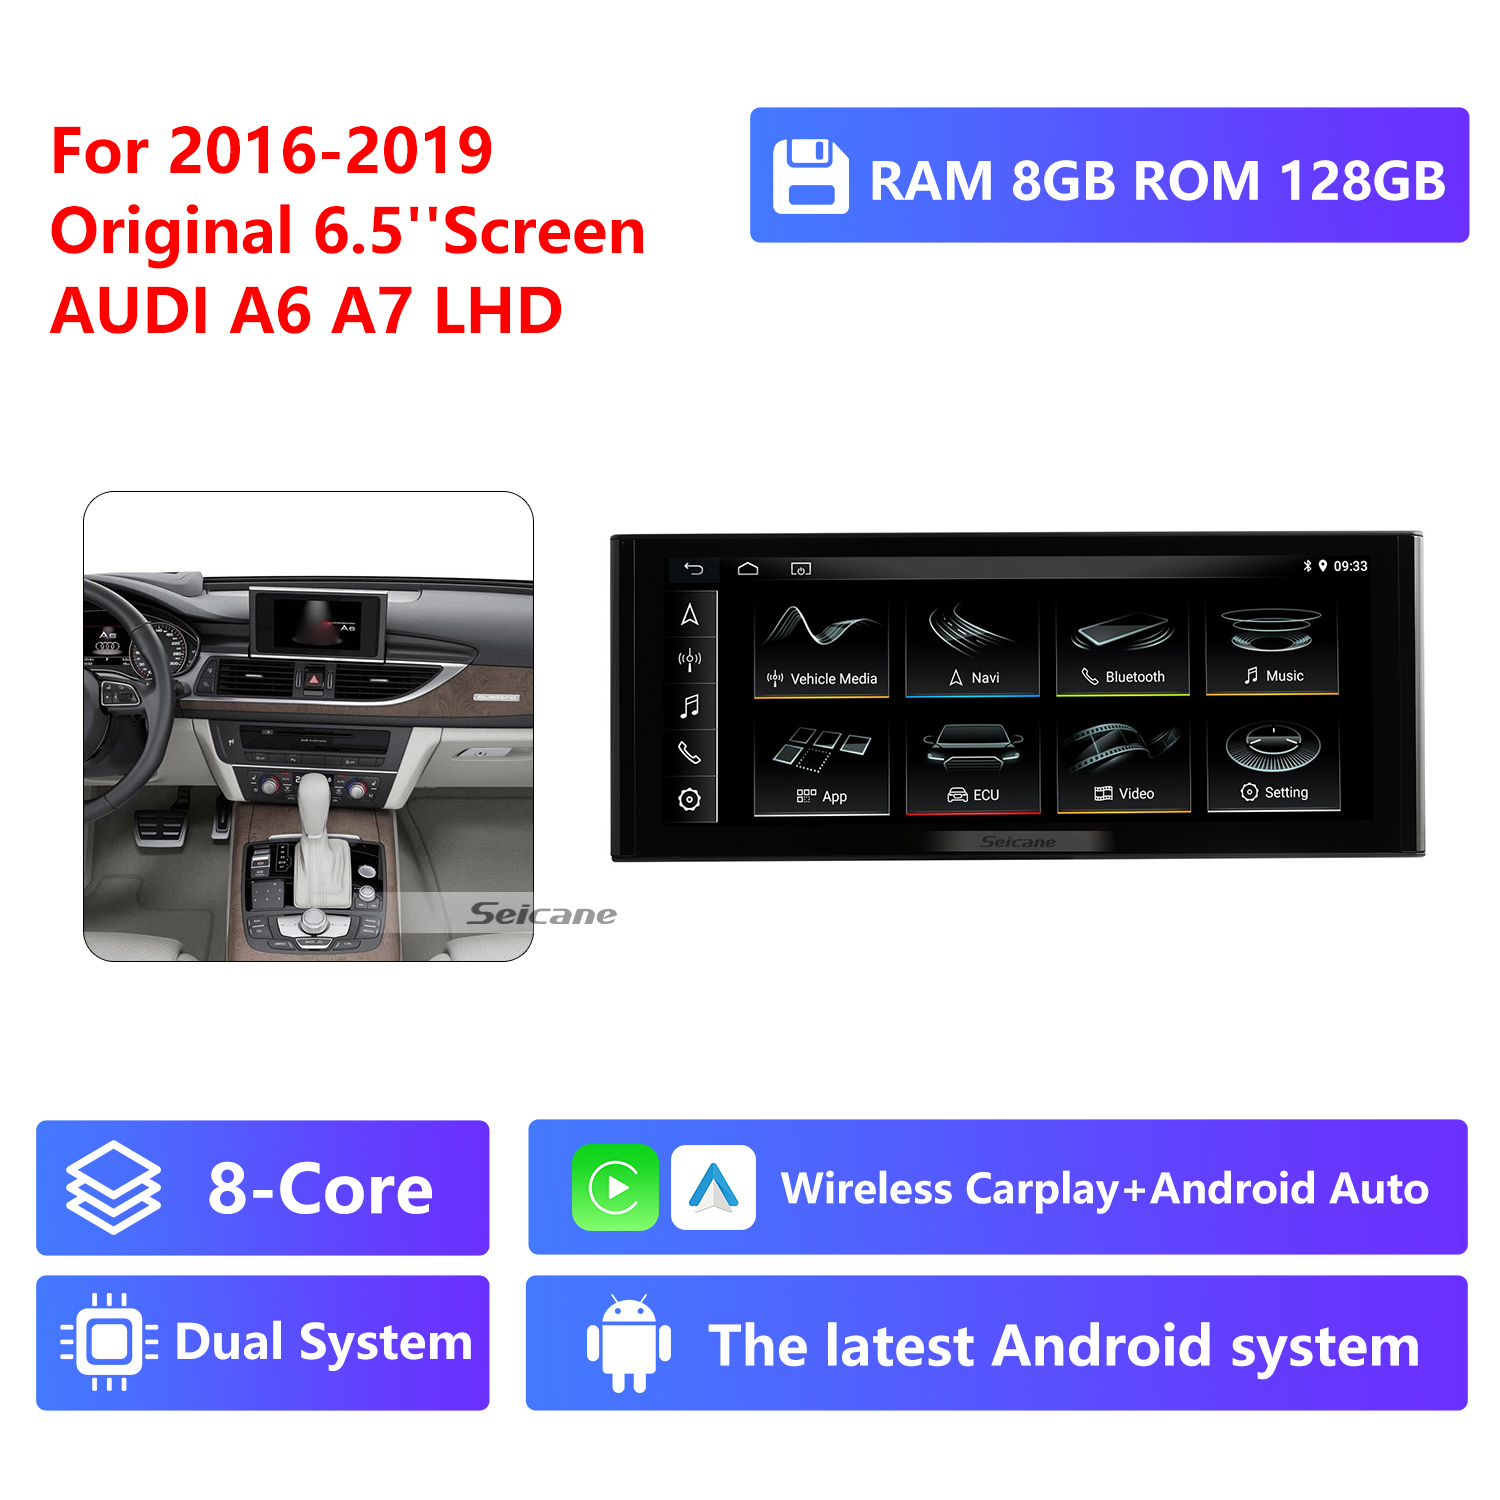 8-Core RAM 8G ROM 128G,2016-2019, Original 6.5"Screen,LHD